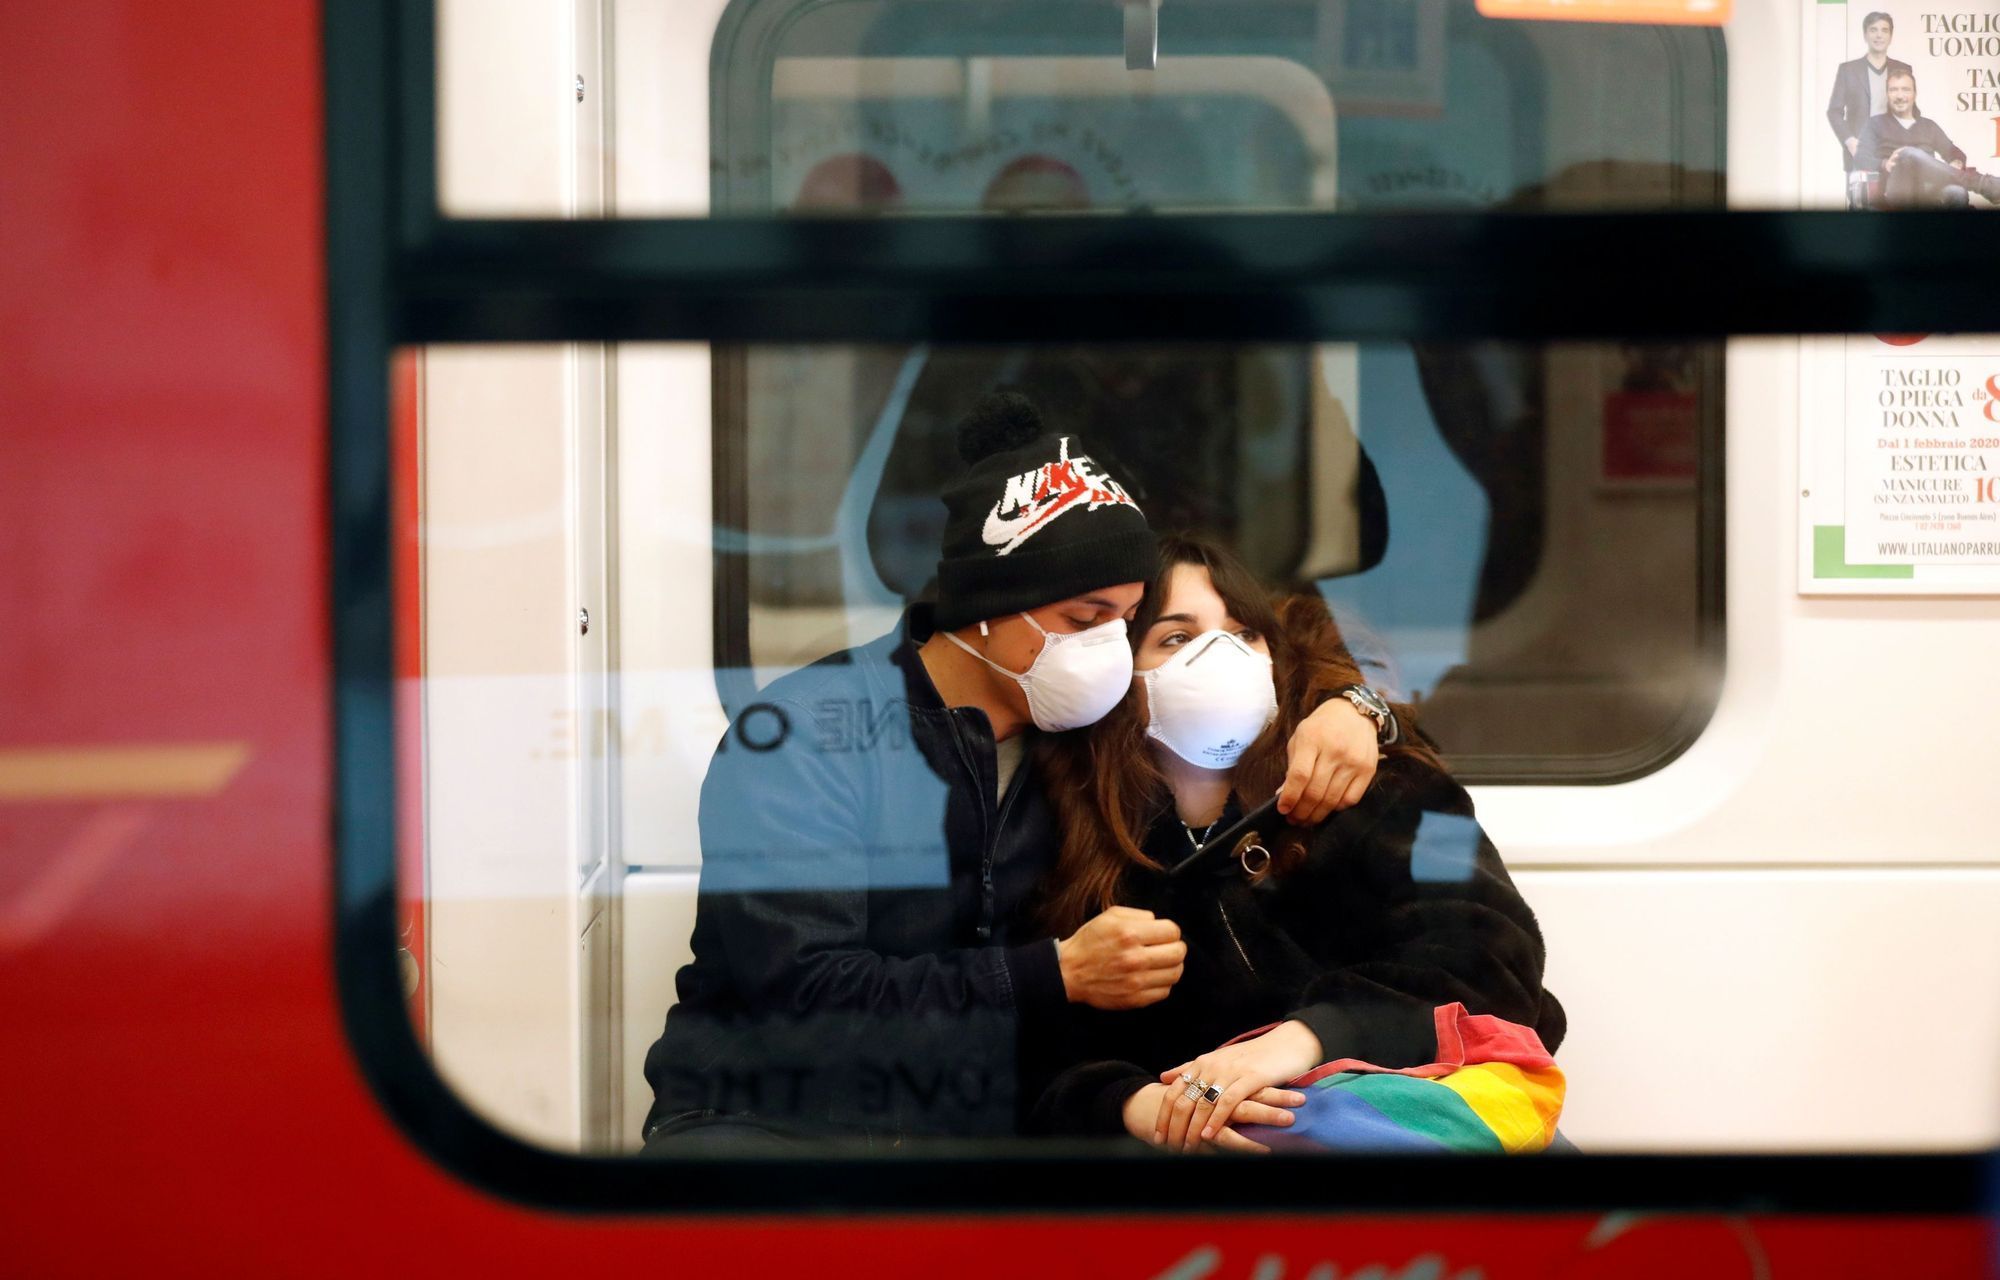 Itálie koronavirus Milán metro maska rouška